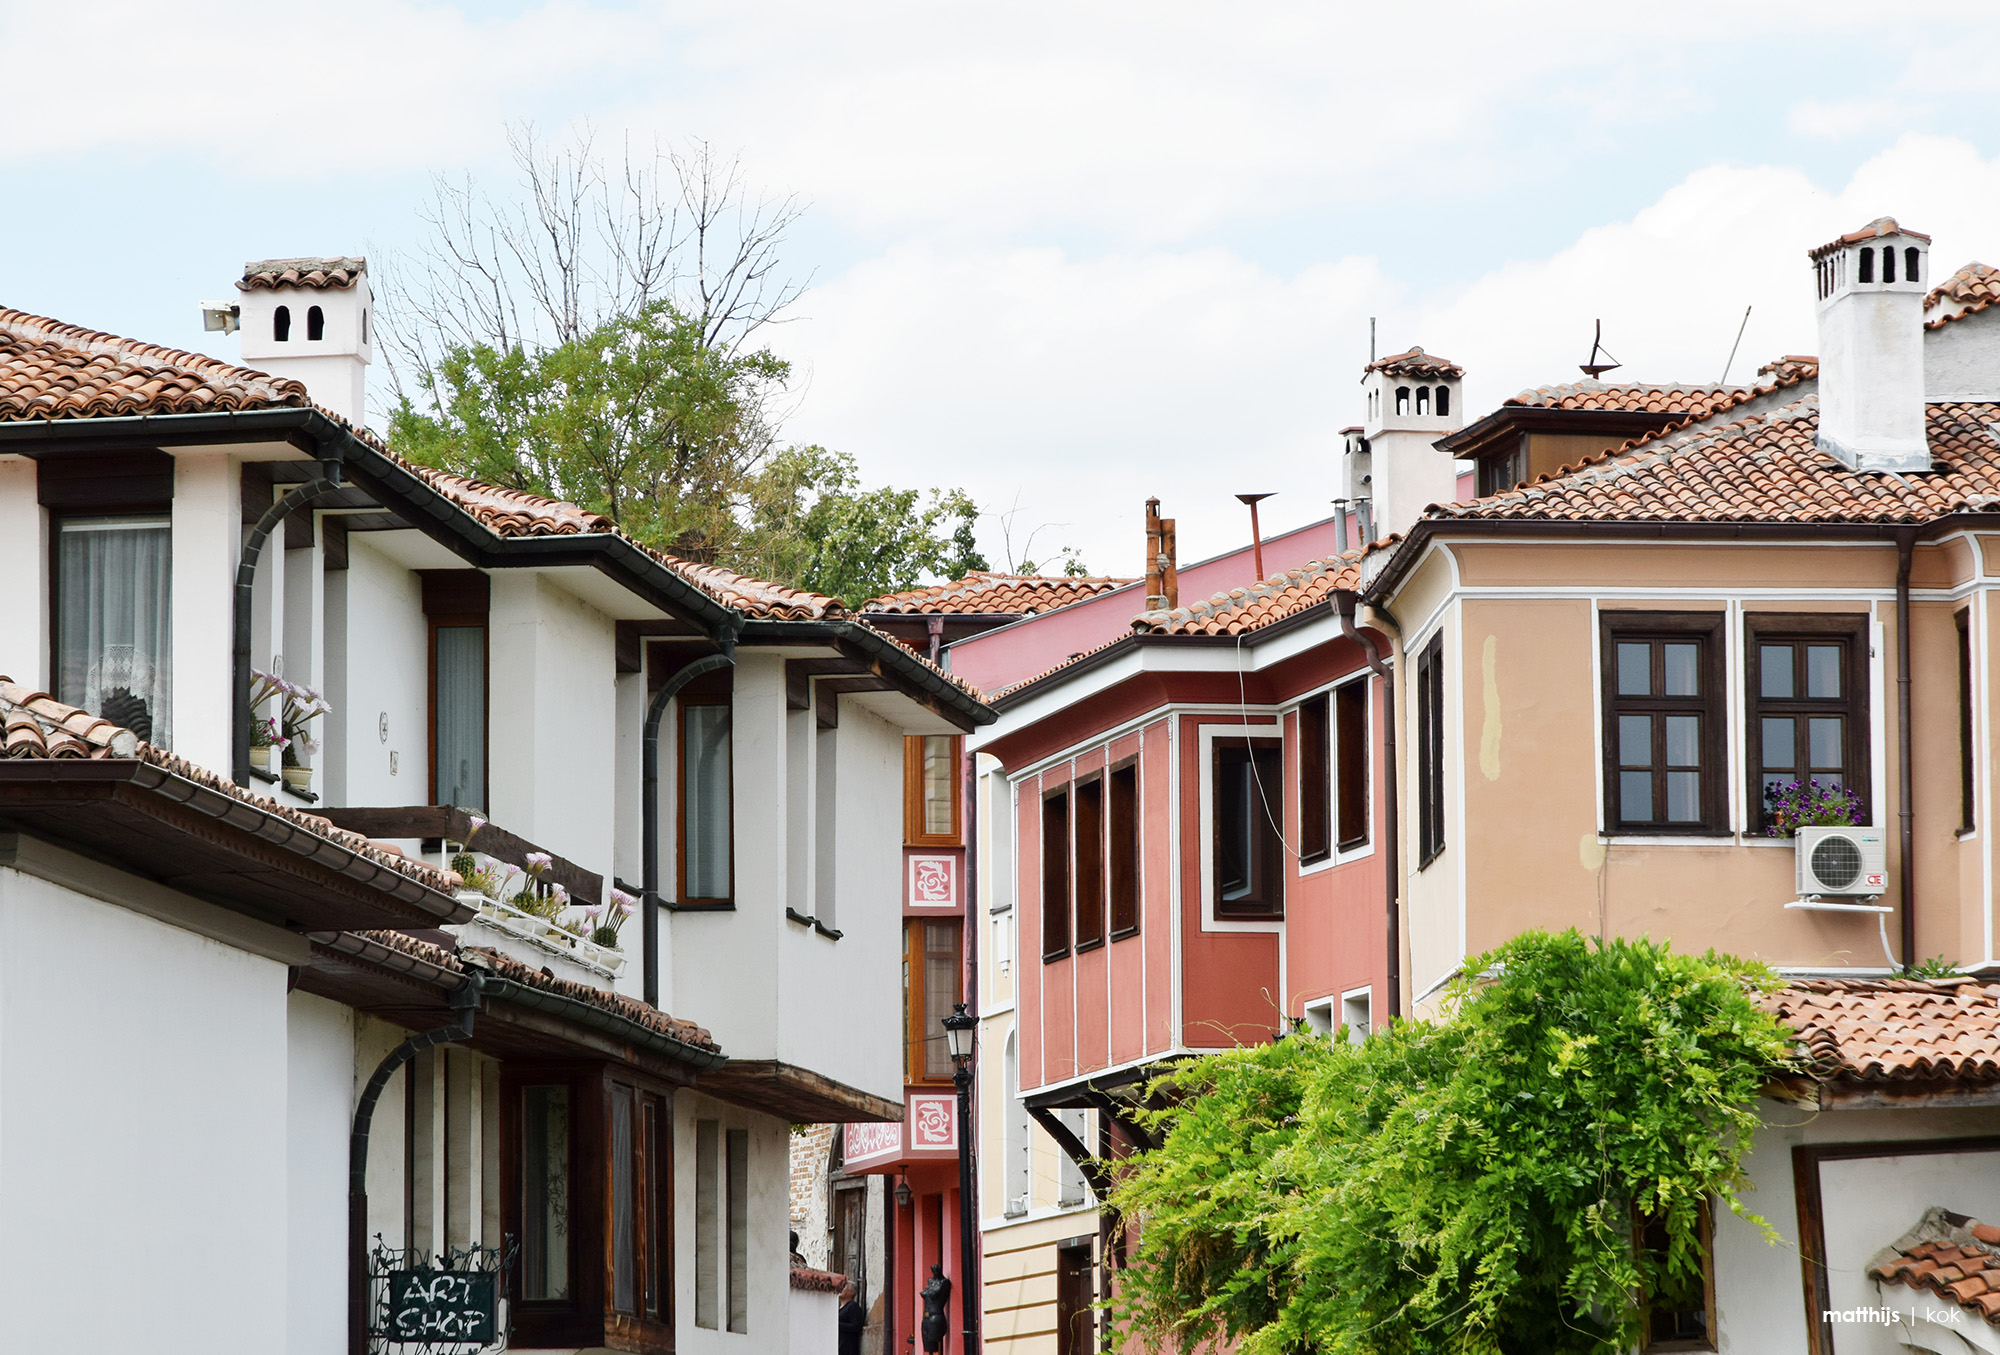 Plovdiv Old Town, Bulgaria | Photo by Matthijs Kok